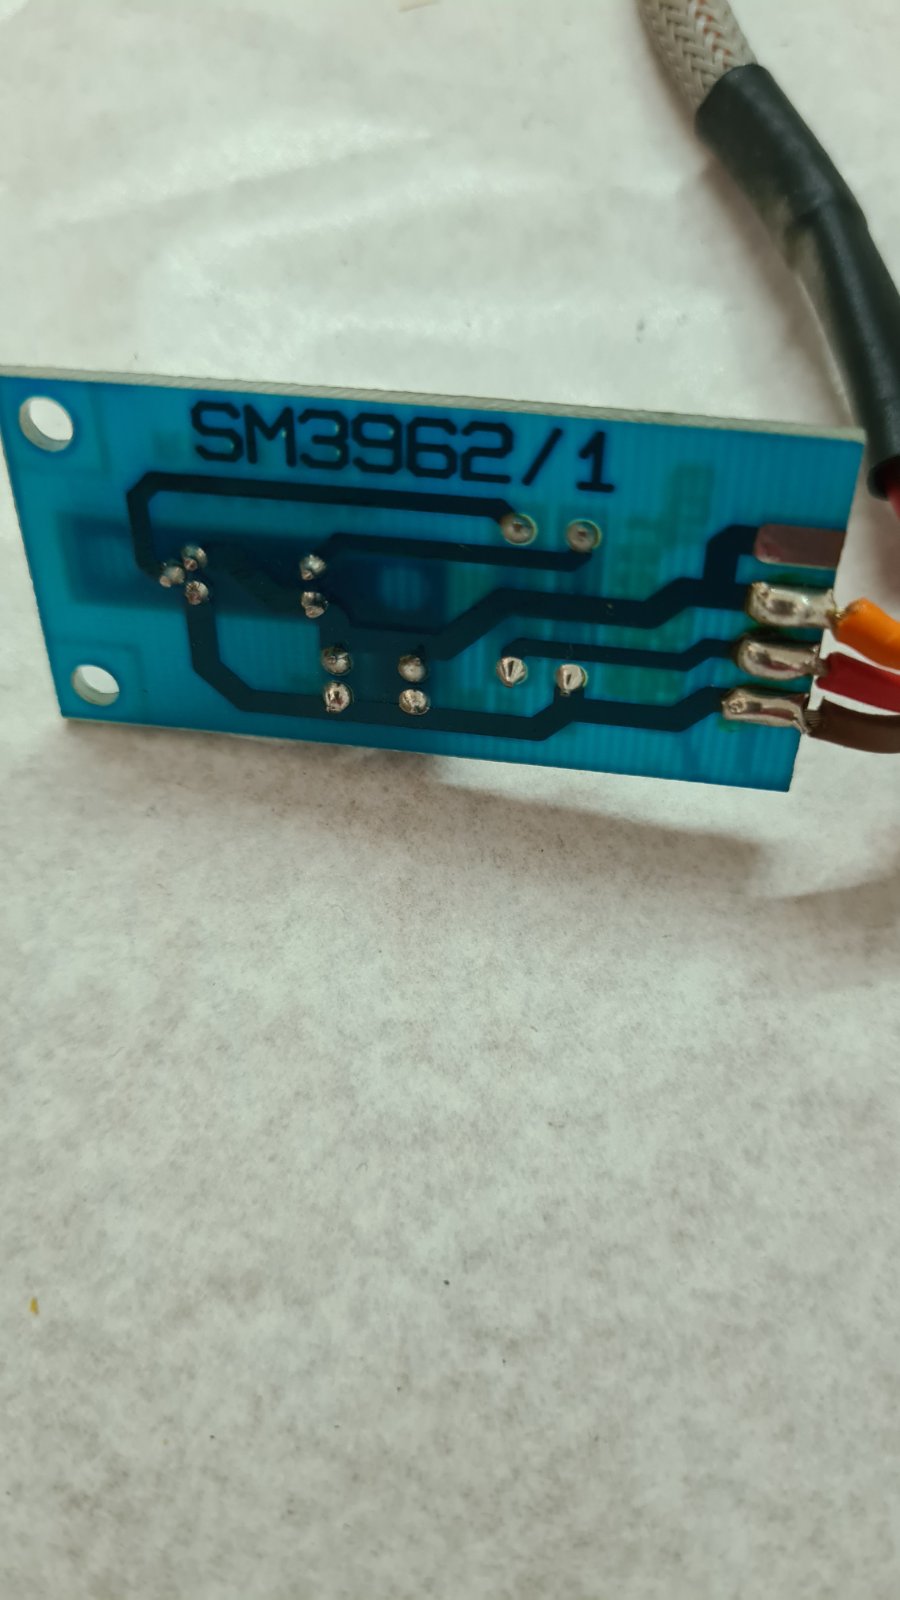 Soundcraft Saturn 624 motion sensor SM3962/1 PCB